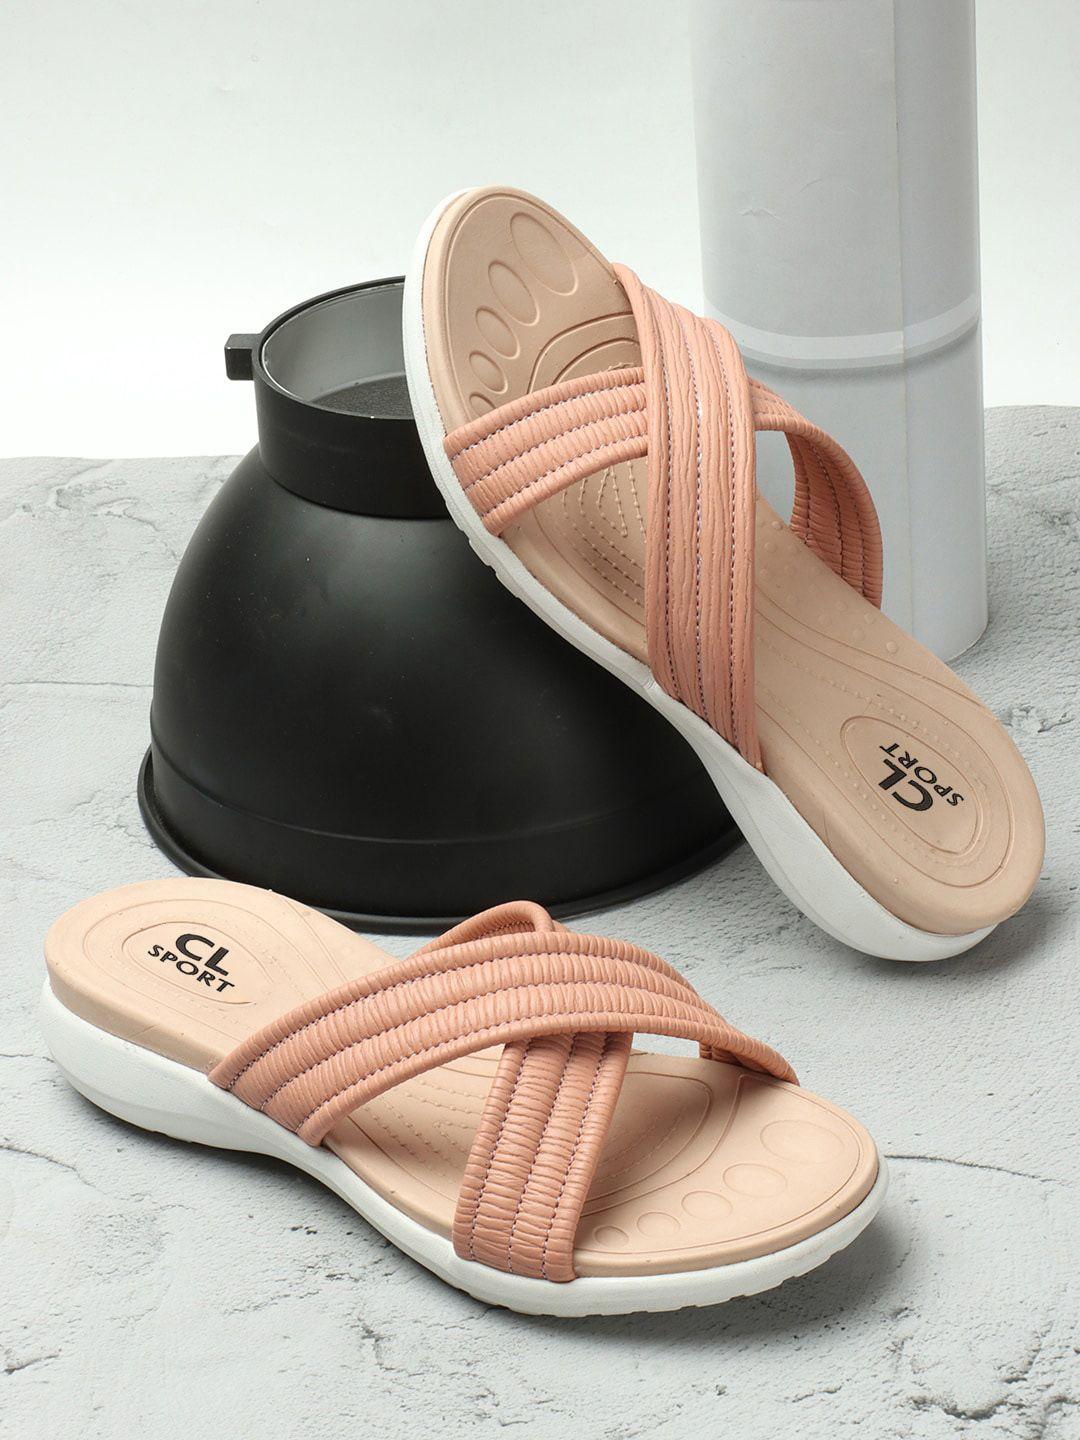 carlton london open toe textured comfort heels